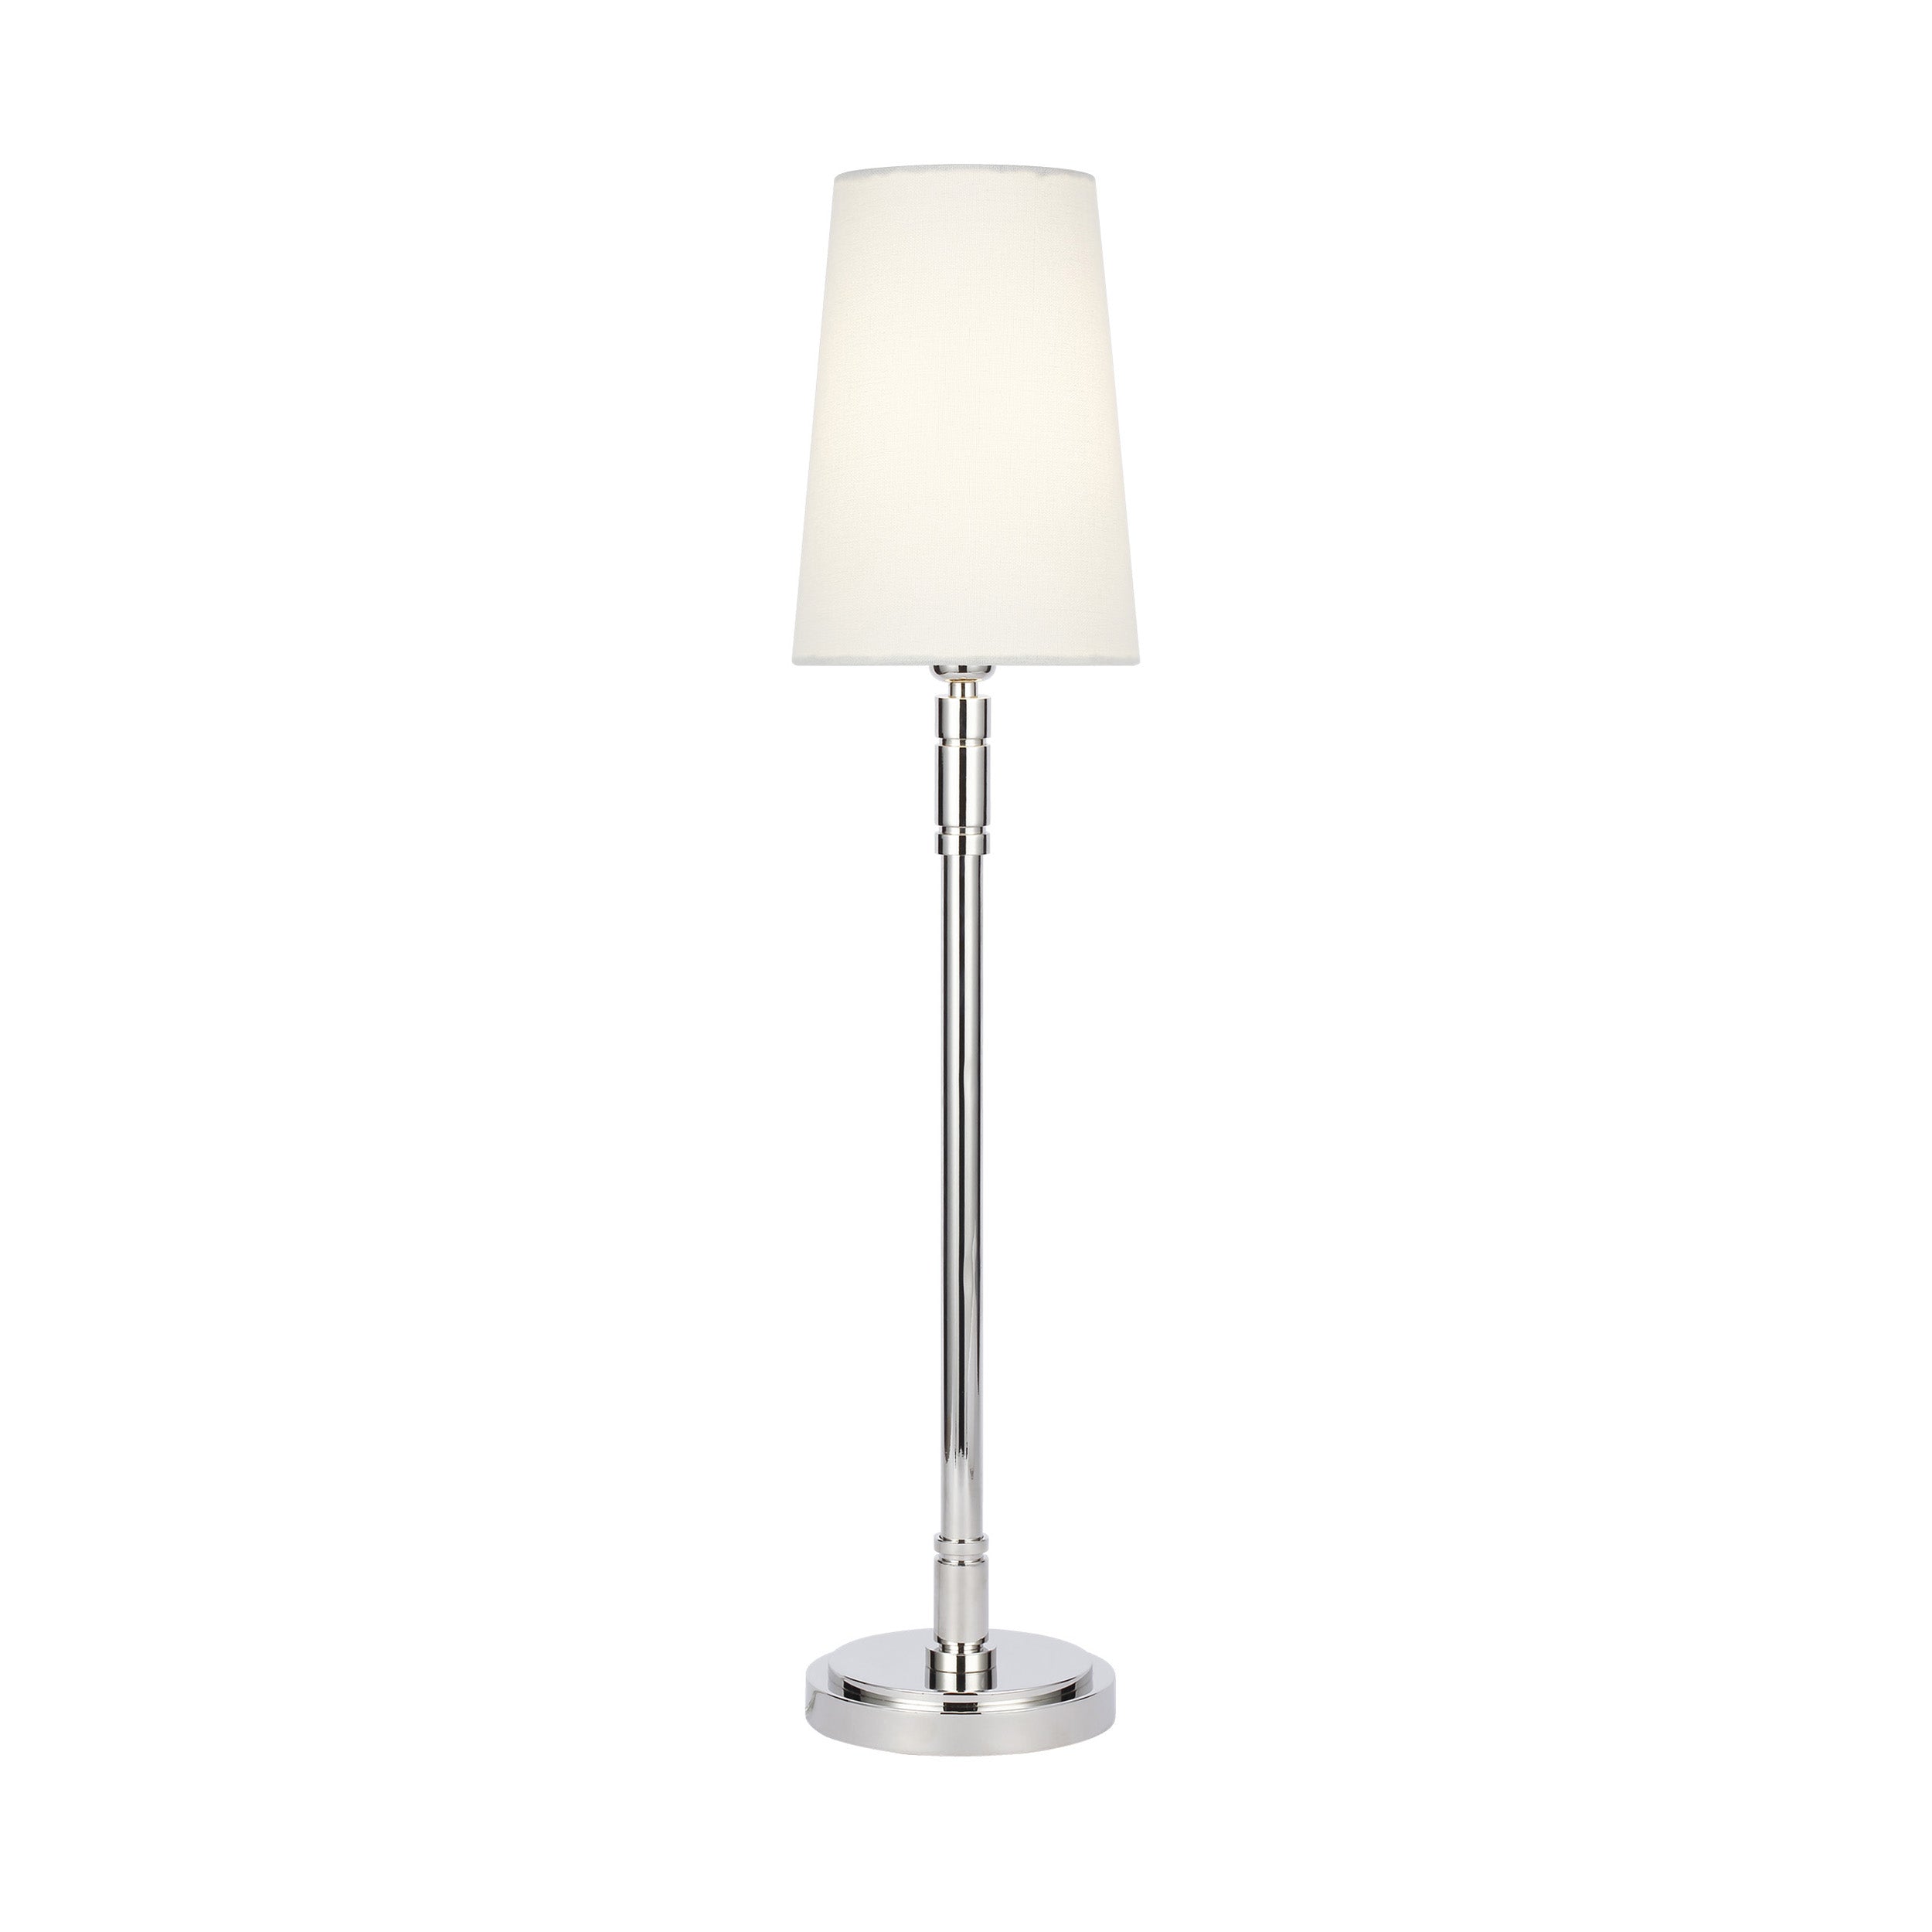 Beckham Classic Table Lamp